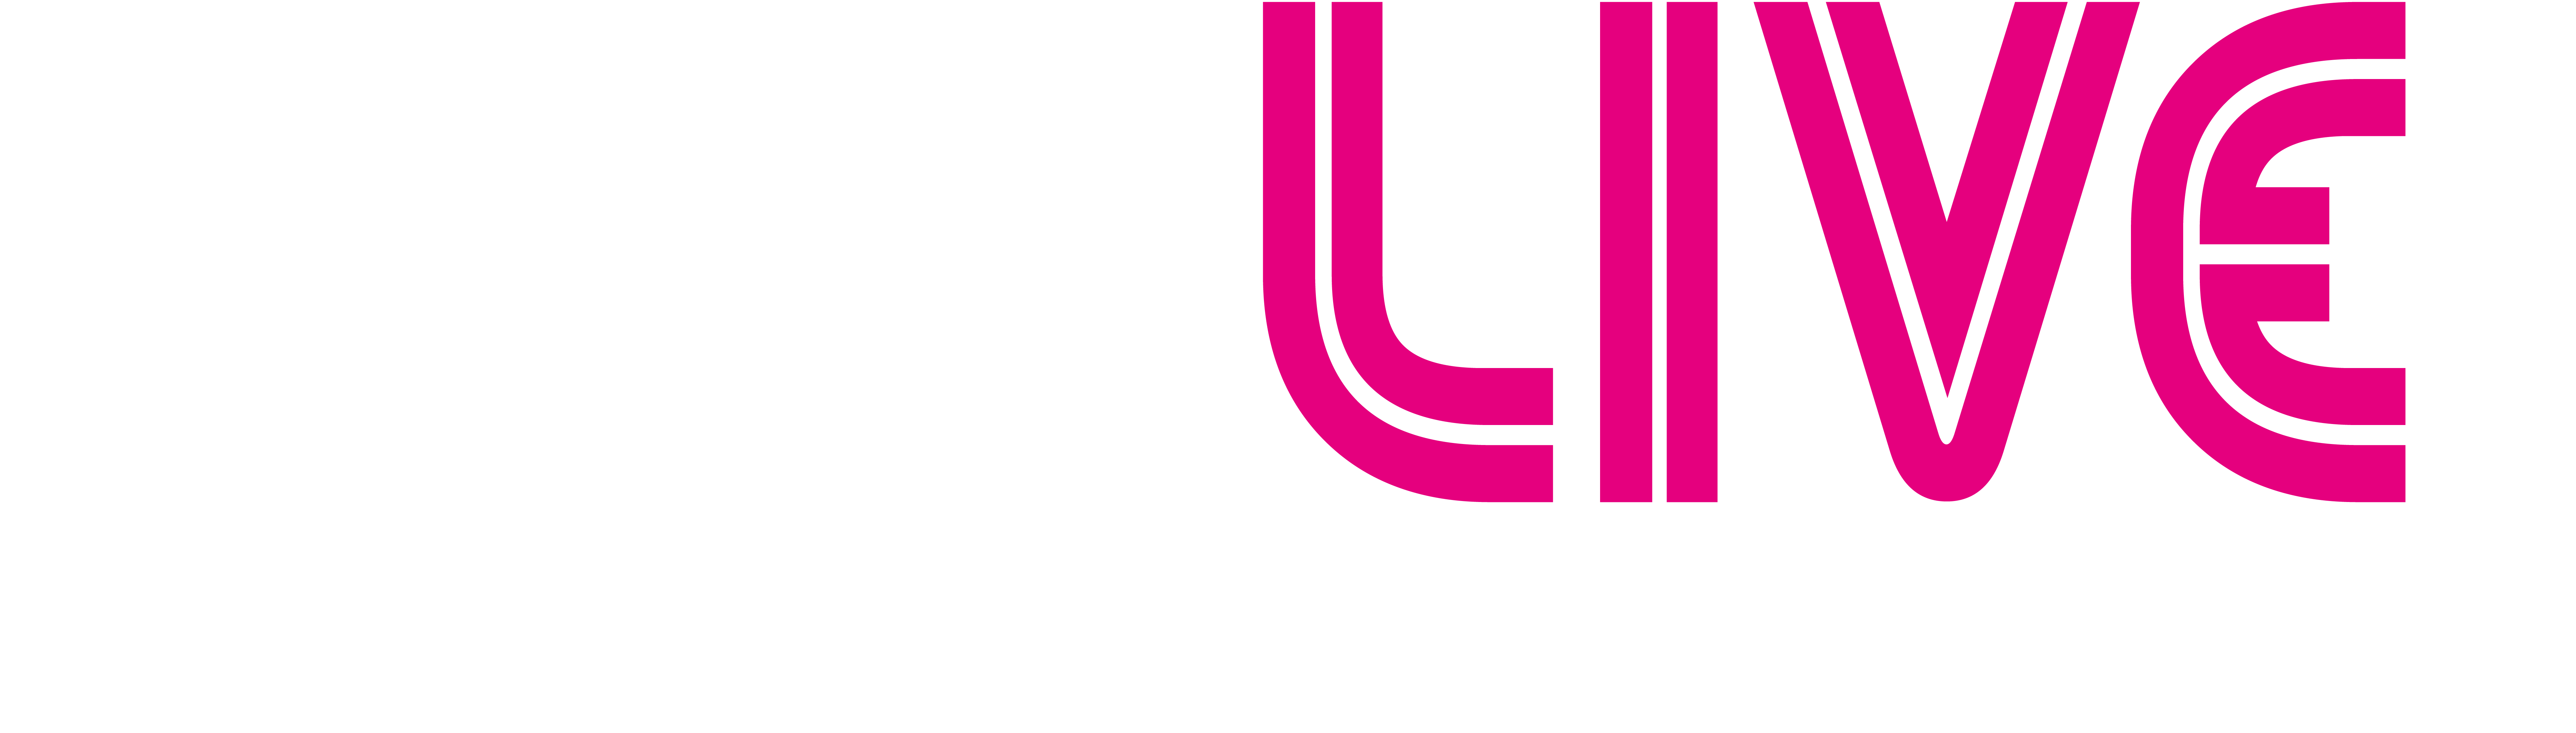 LedLIVE logo